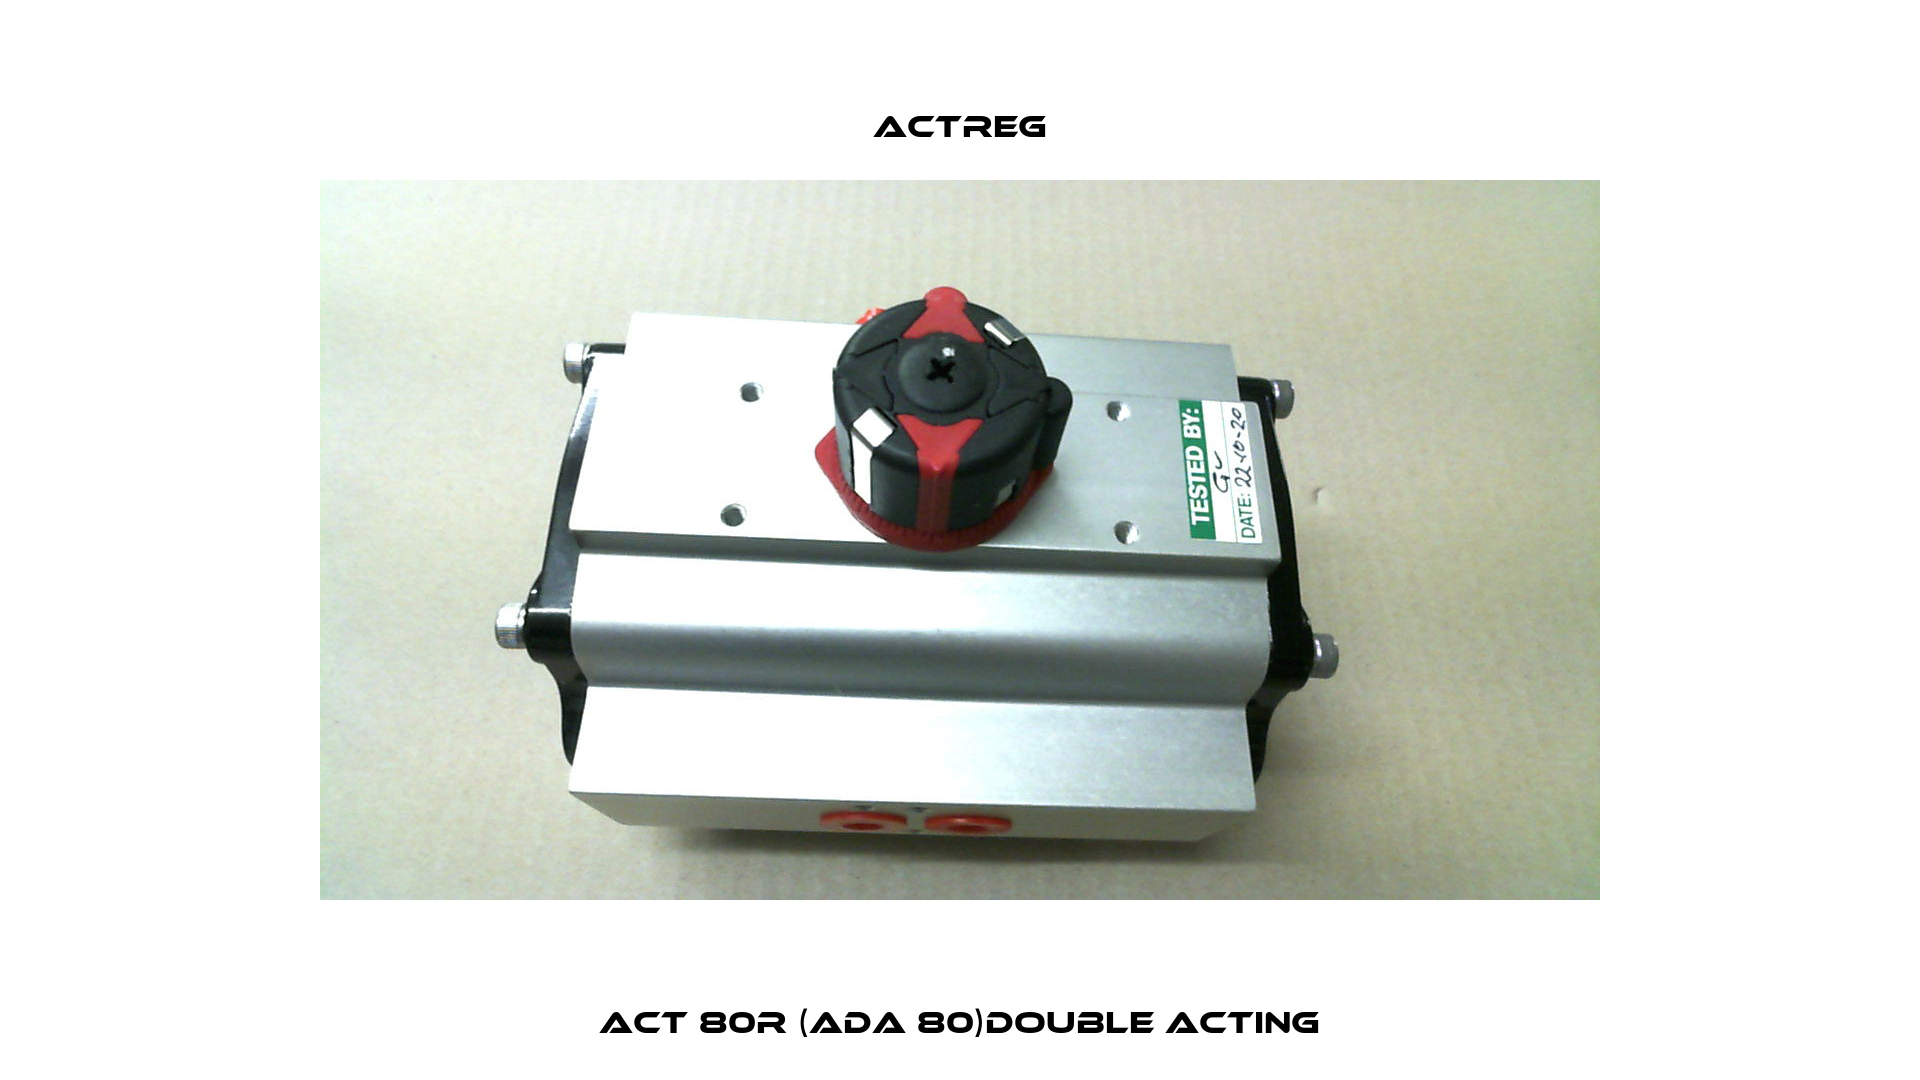 ACT 80R (ADA 80)double acting Actreg